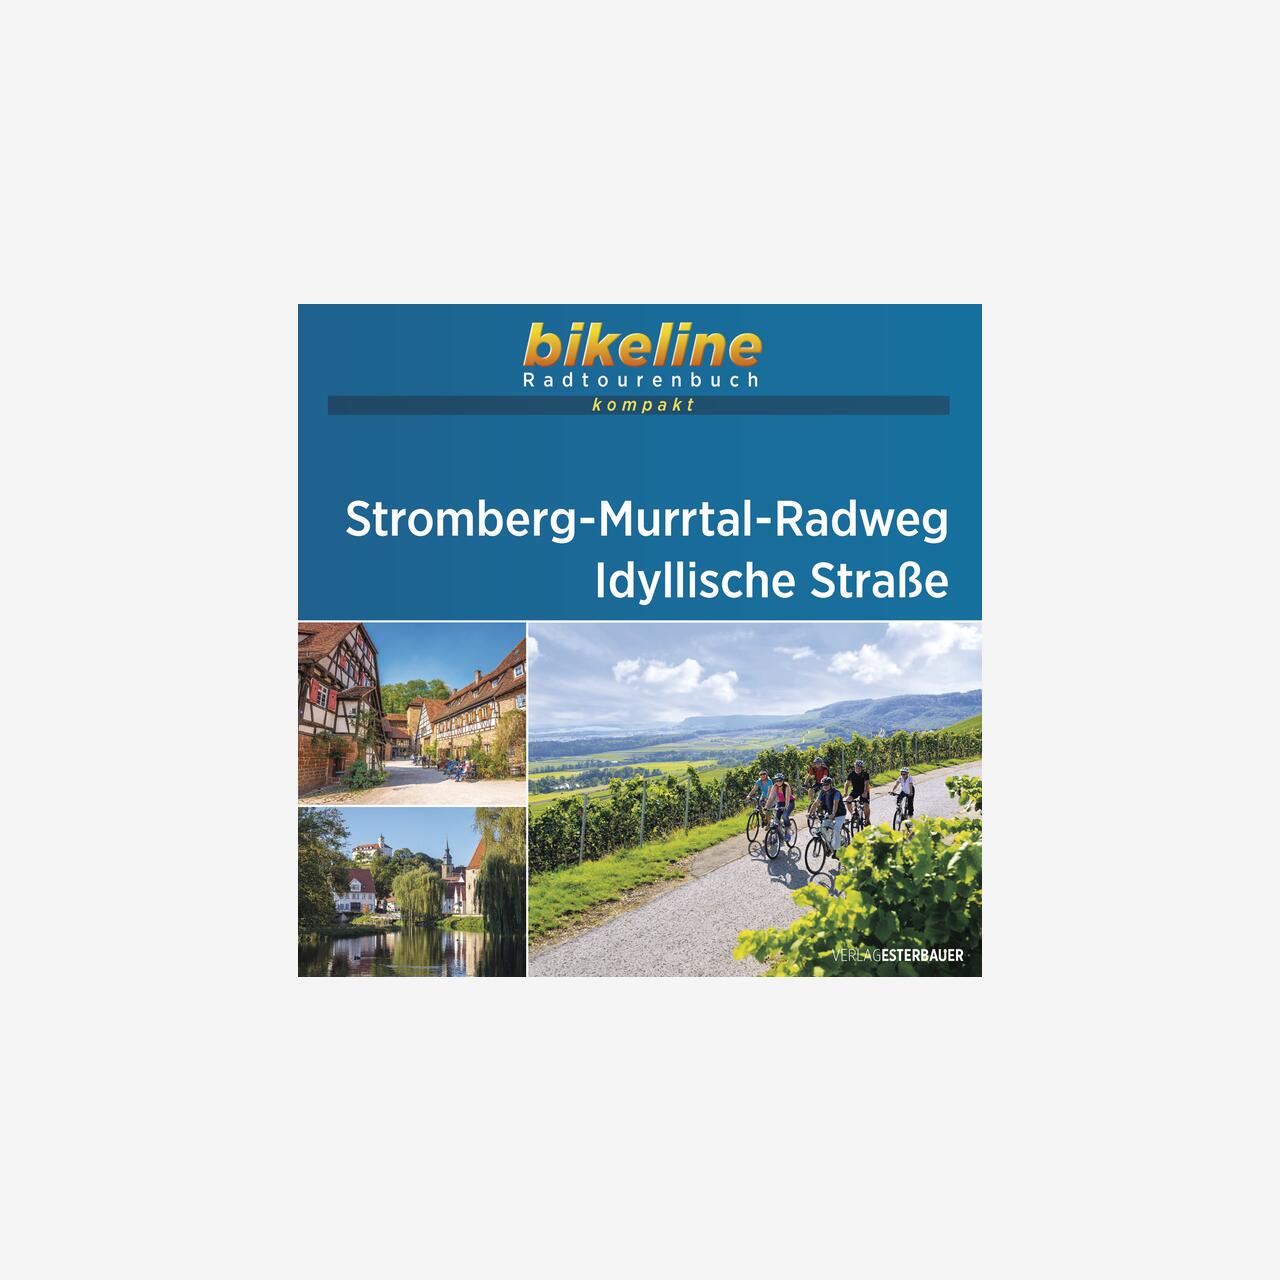 bikeline Radtourenbuch kompakt Stromberg-Murrtal-Radweg • Idyllische